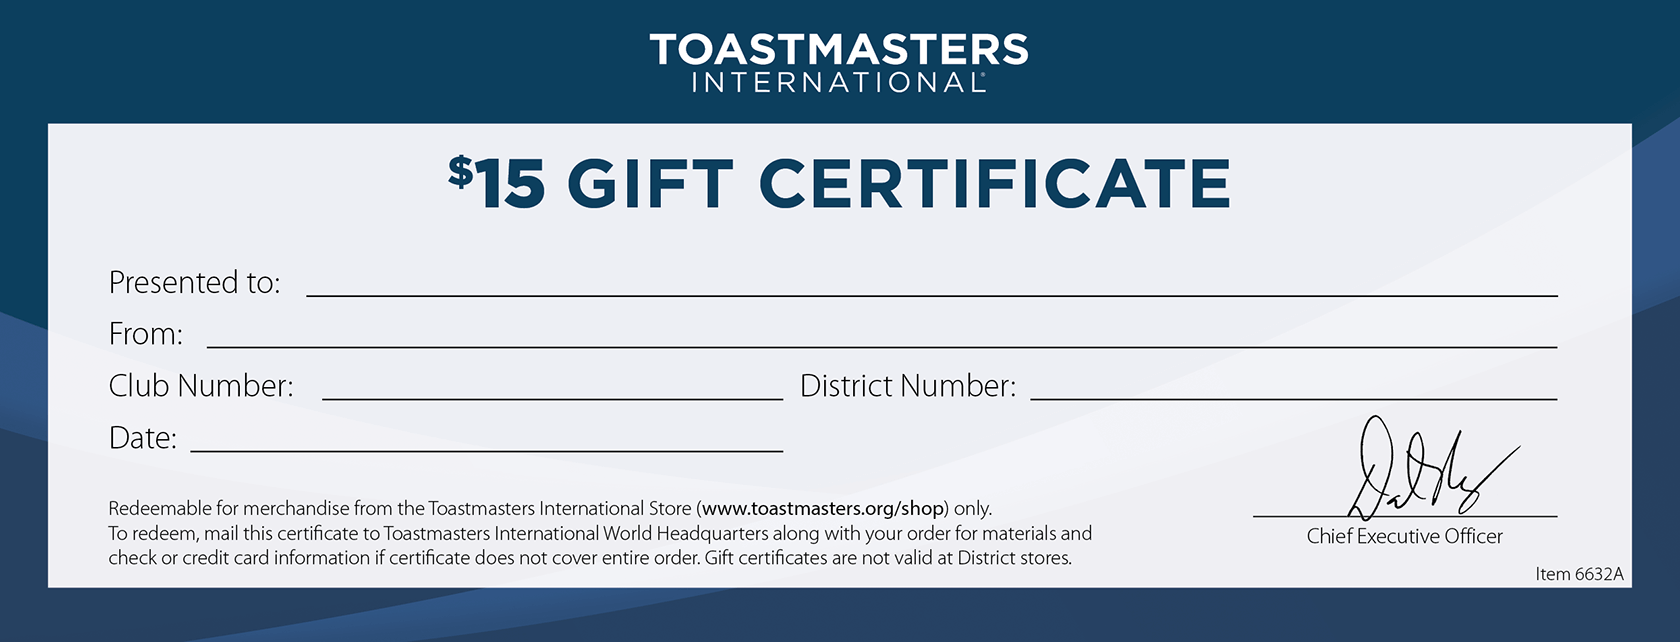 Toastmasters-Gift-Certificate-15-Dollars